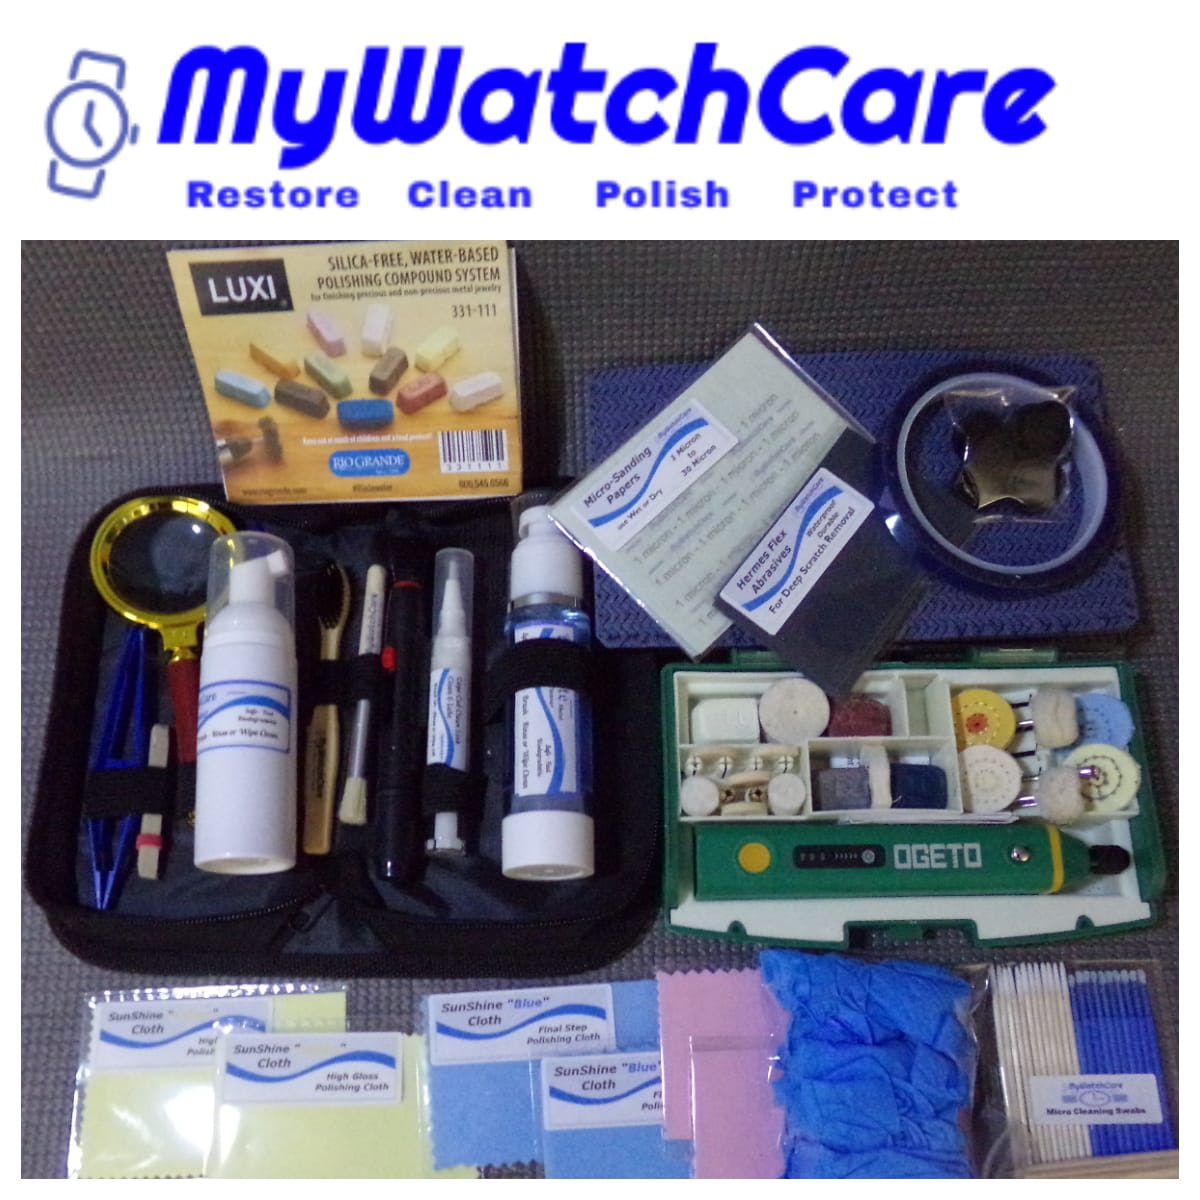 Watch Care Kit